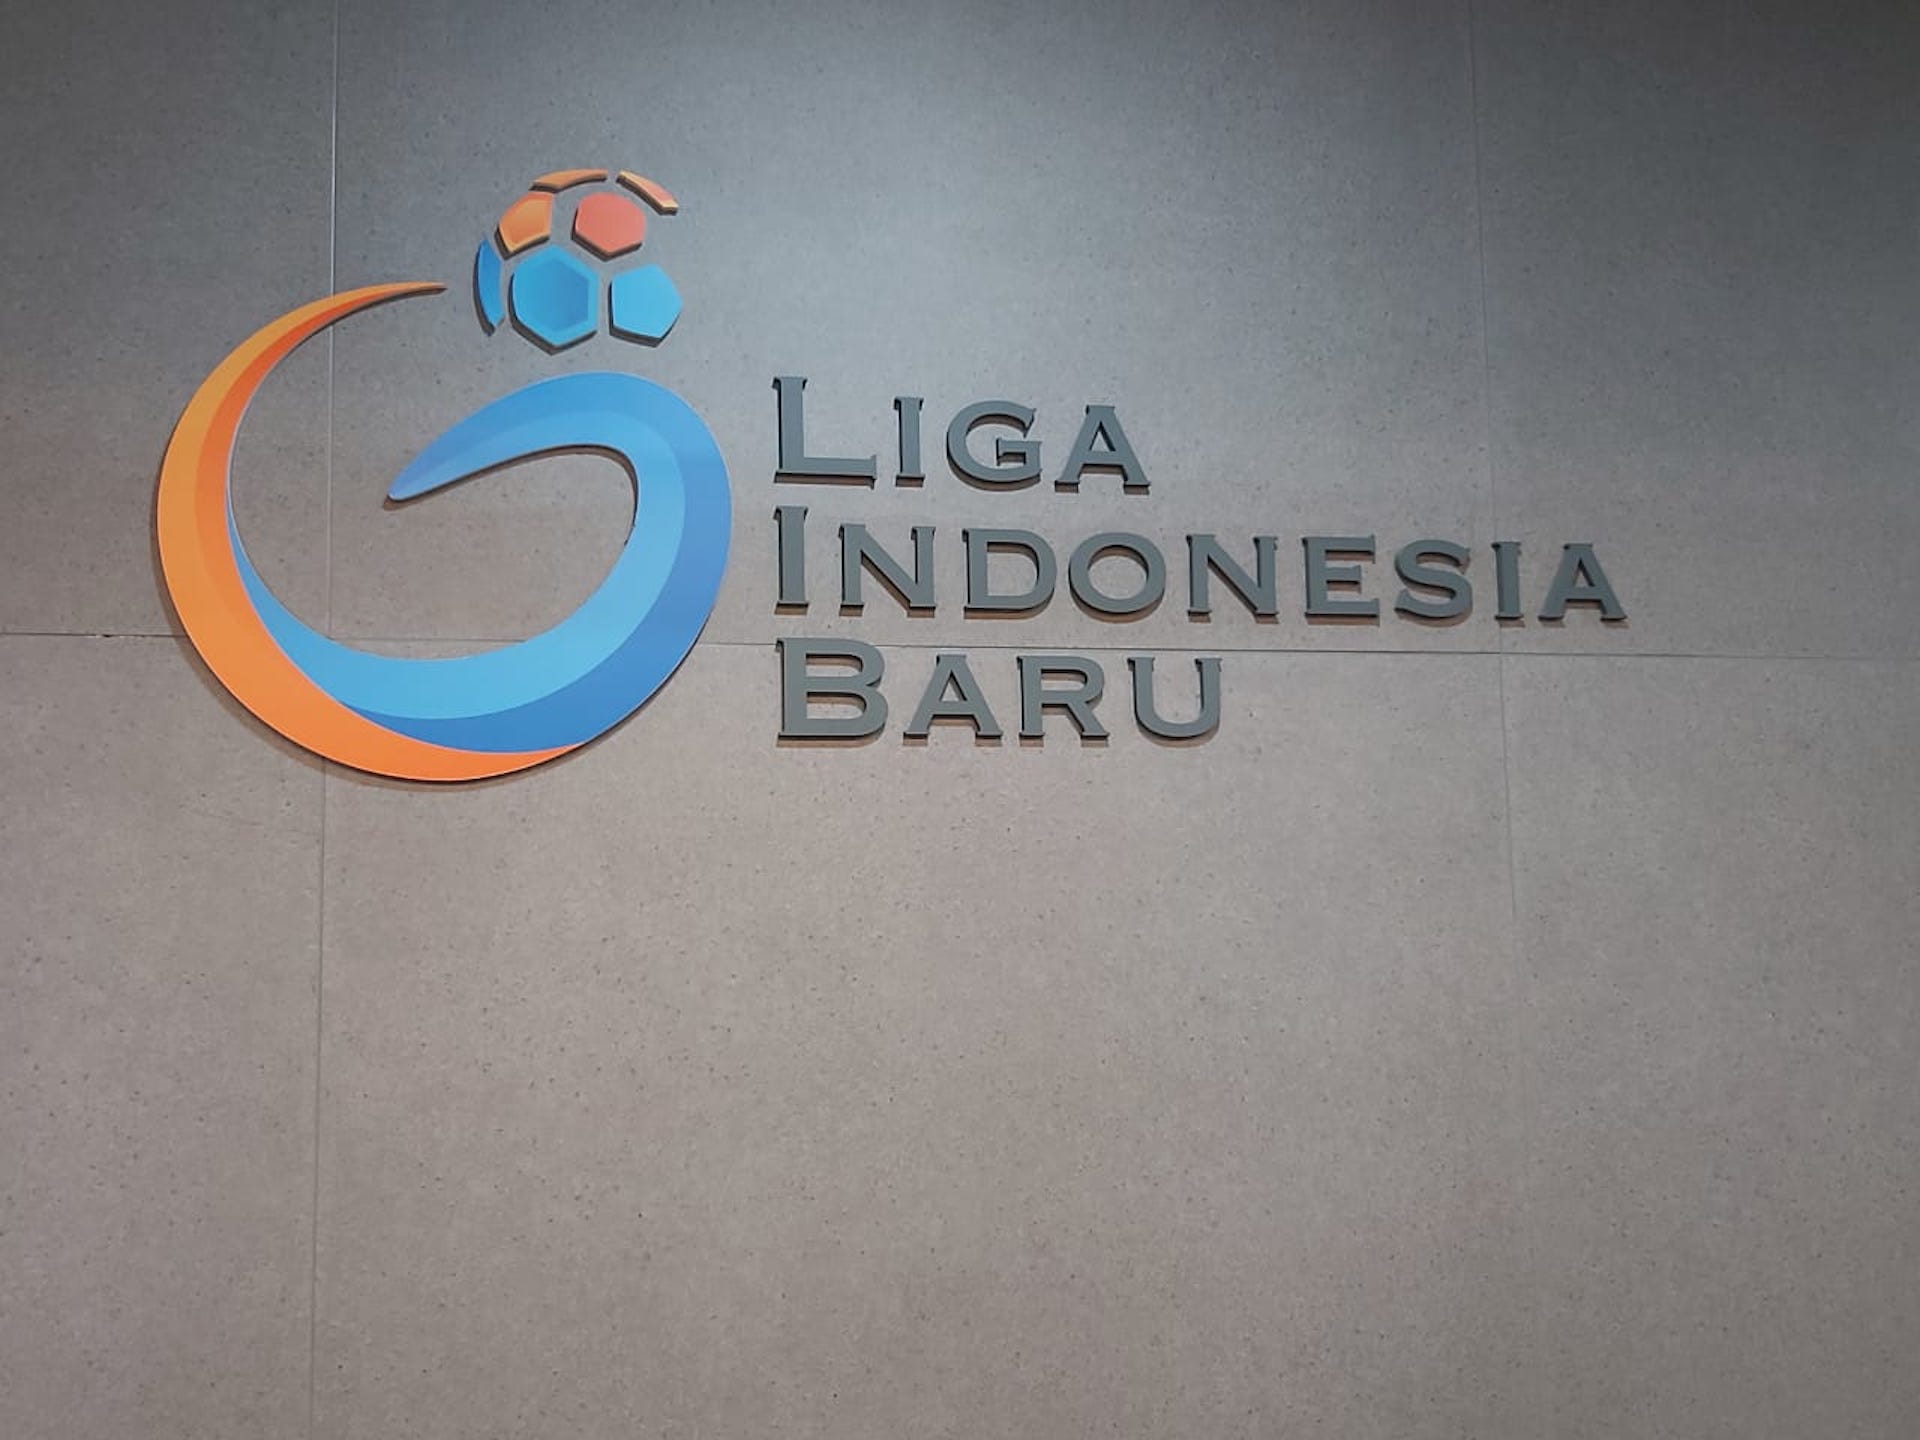 PT LIB (Liga Indonesia Baru)